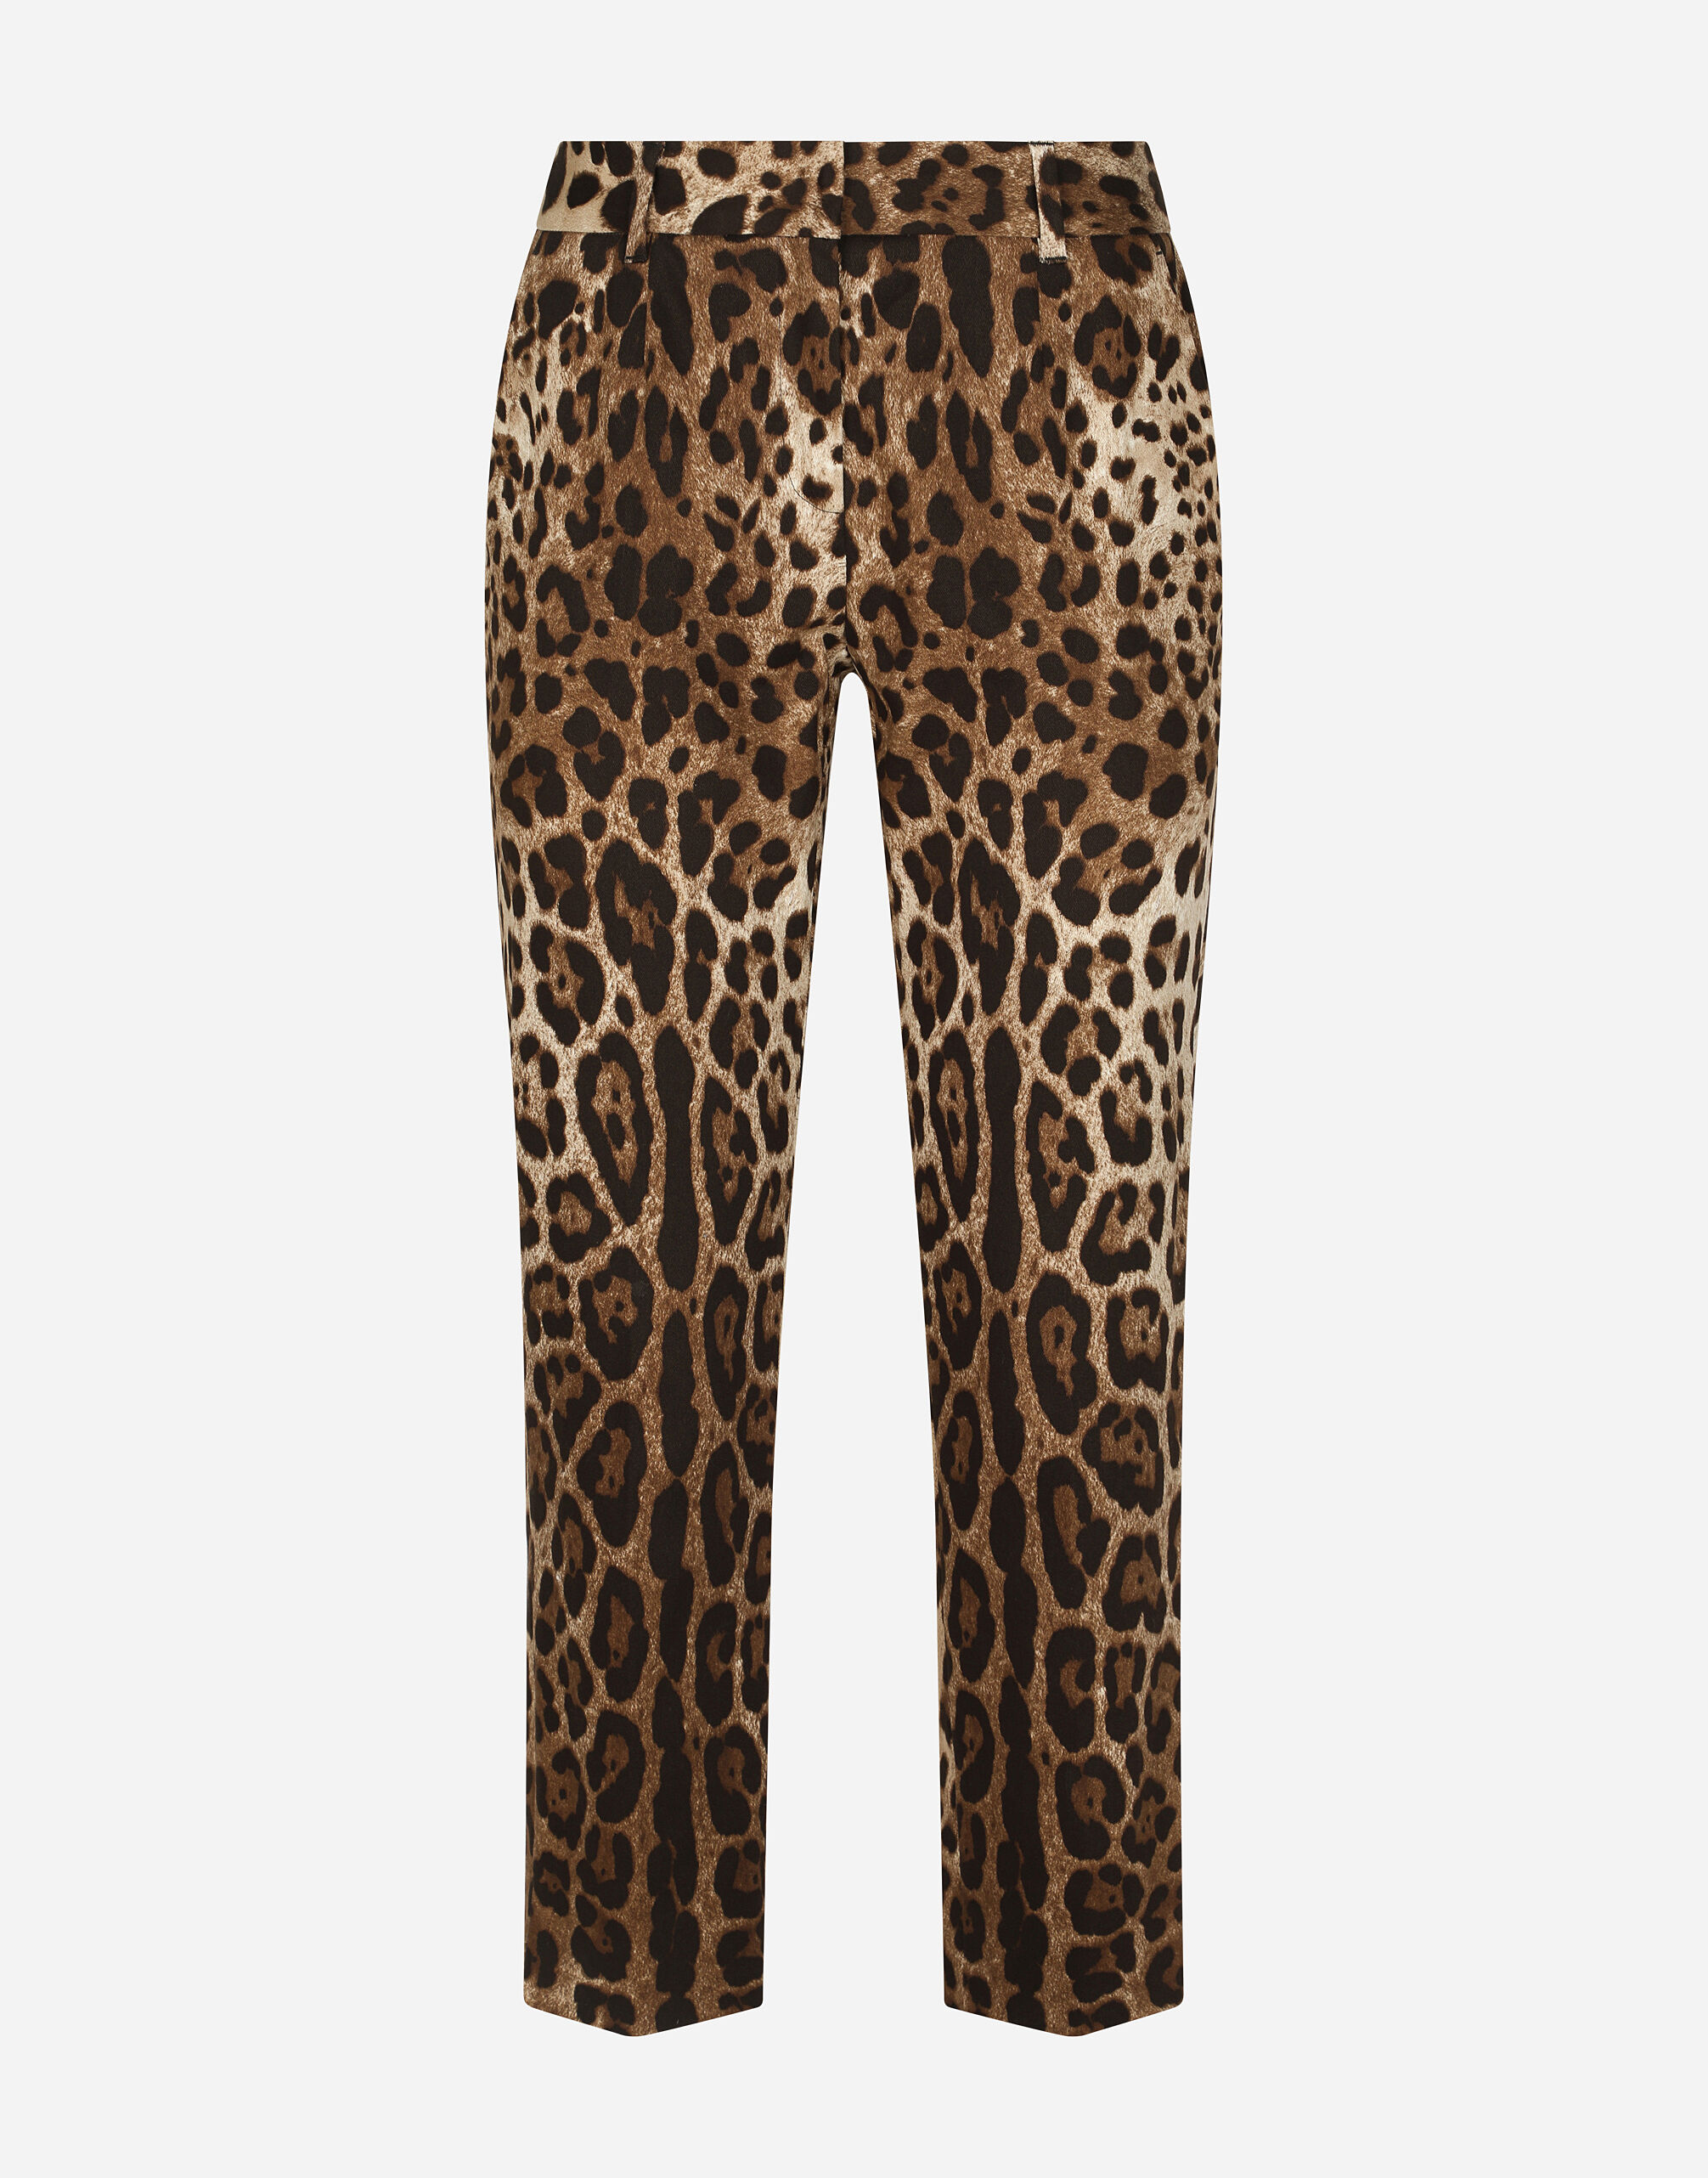 Men's Leopard Print Extra Long Drawstring Joggers Pants SMLL~5XL -  JG3021-B9C | eBay